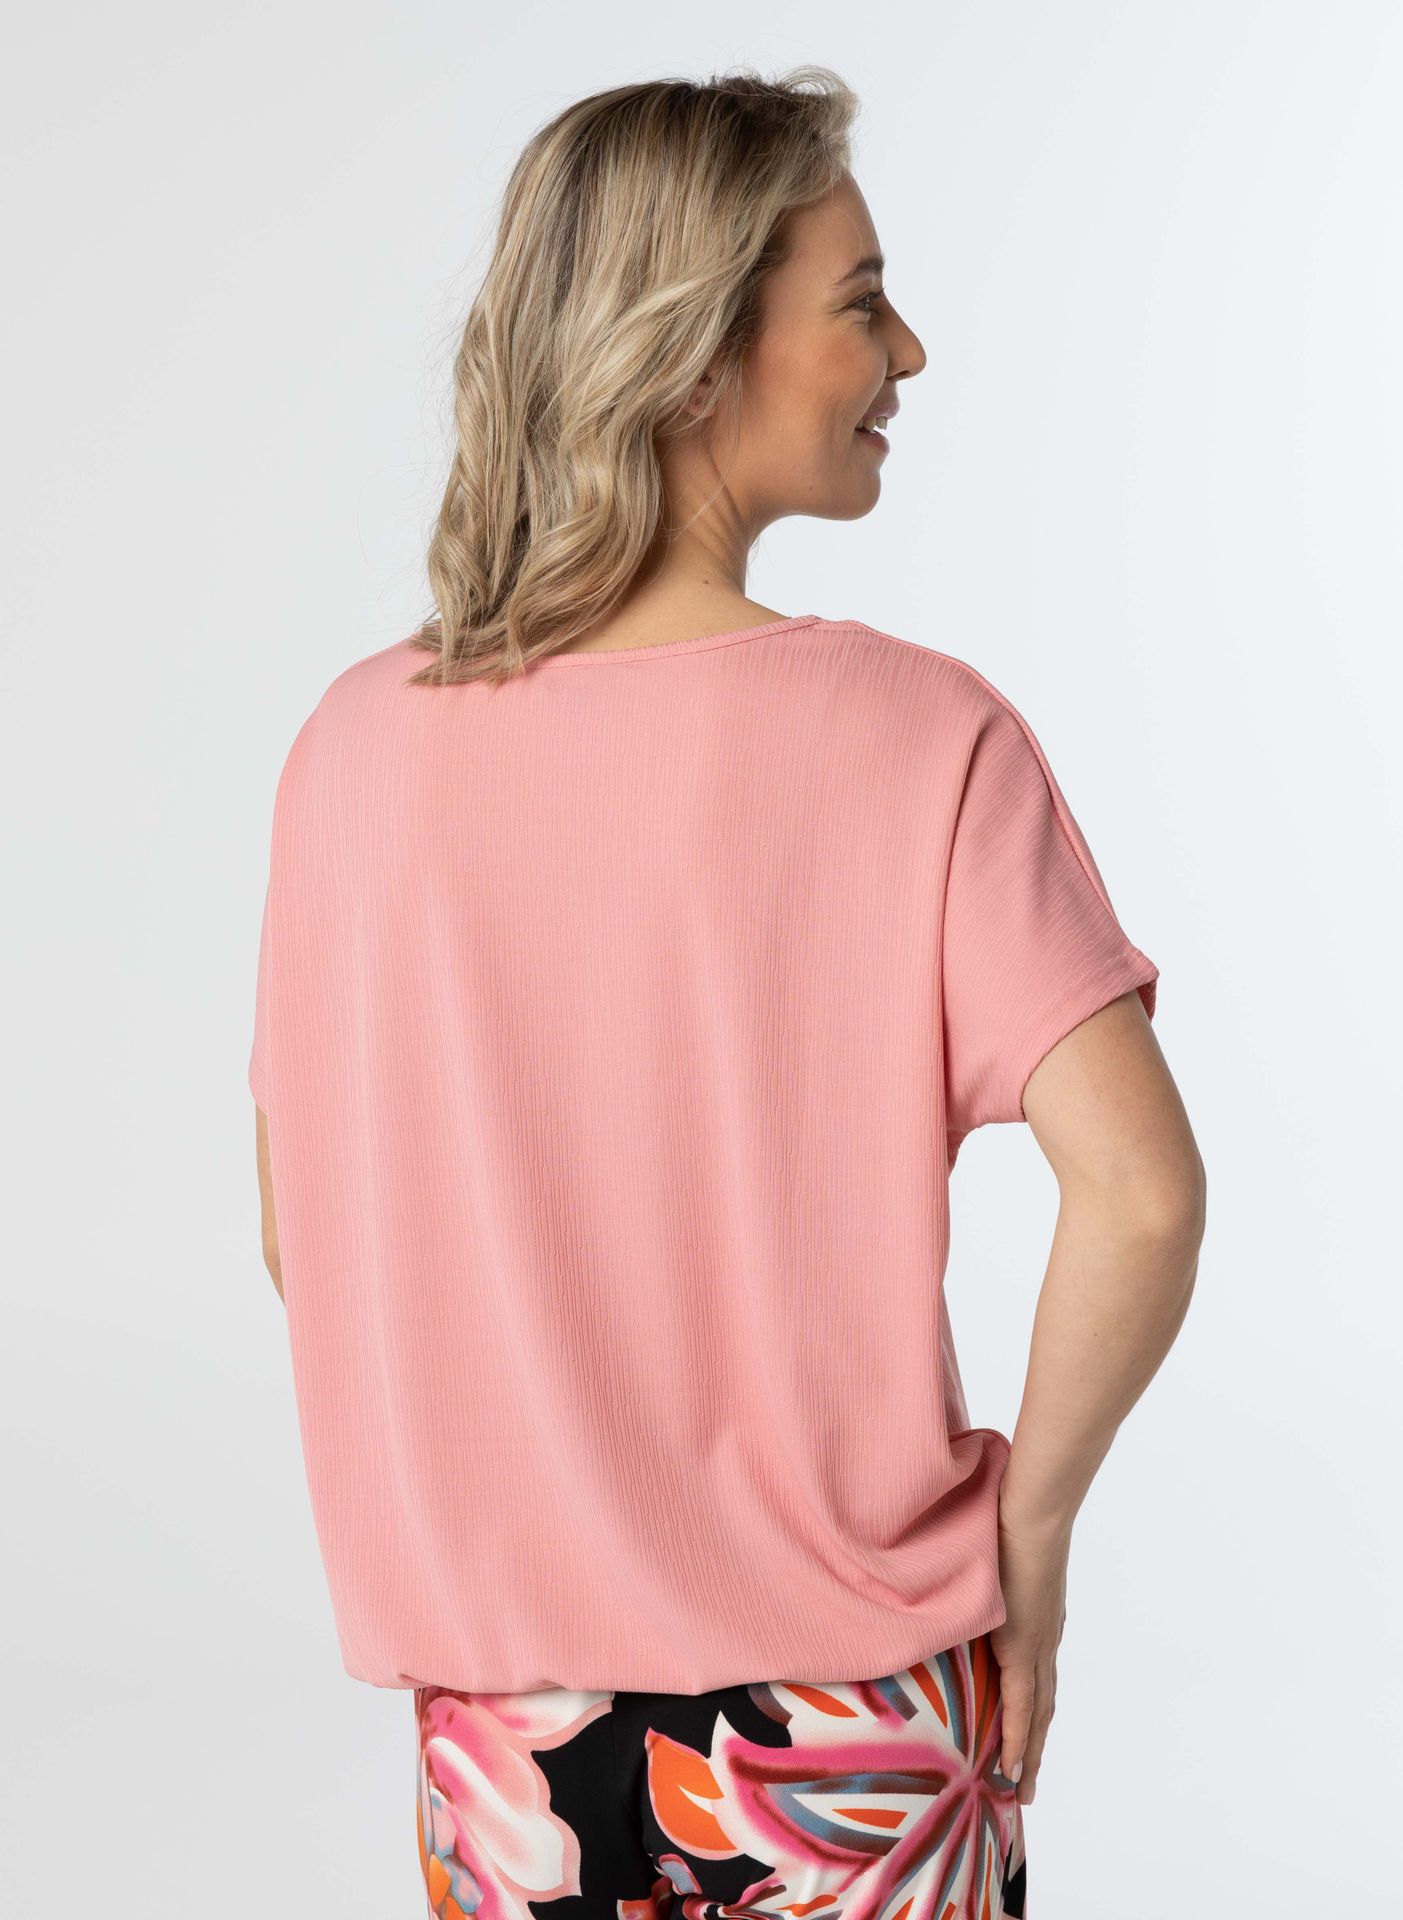 vertraging Vervorming ondeugd Shirt Roze | Norah Dameskleding maat 36 t/m 48